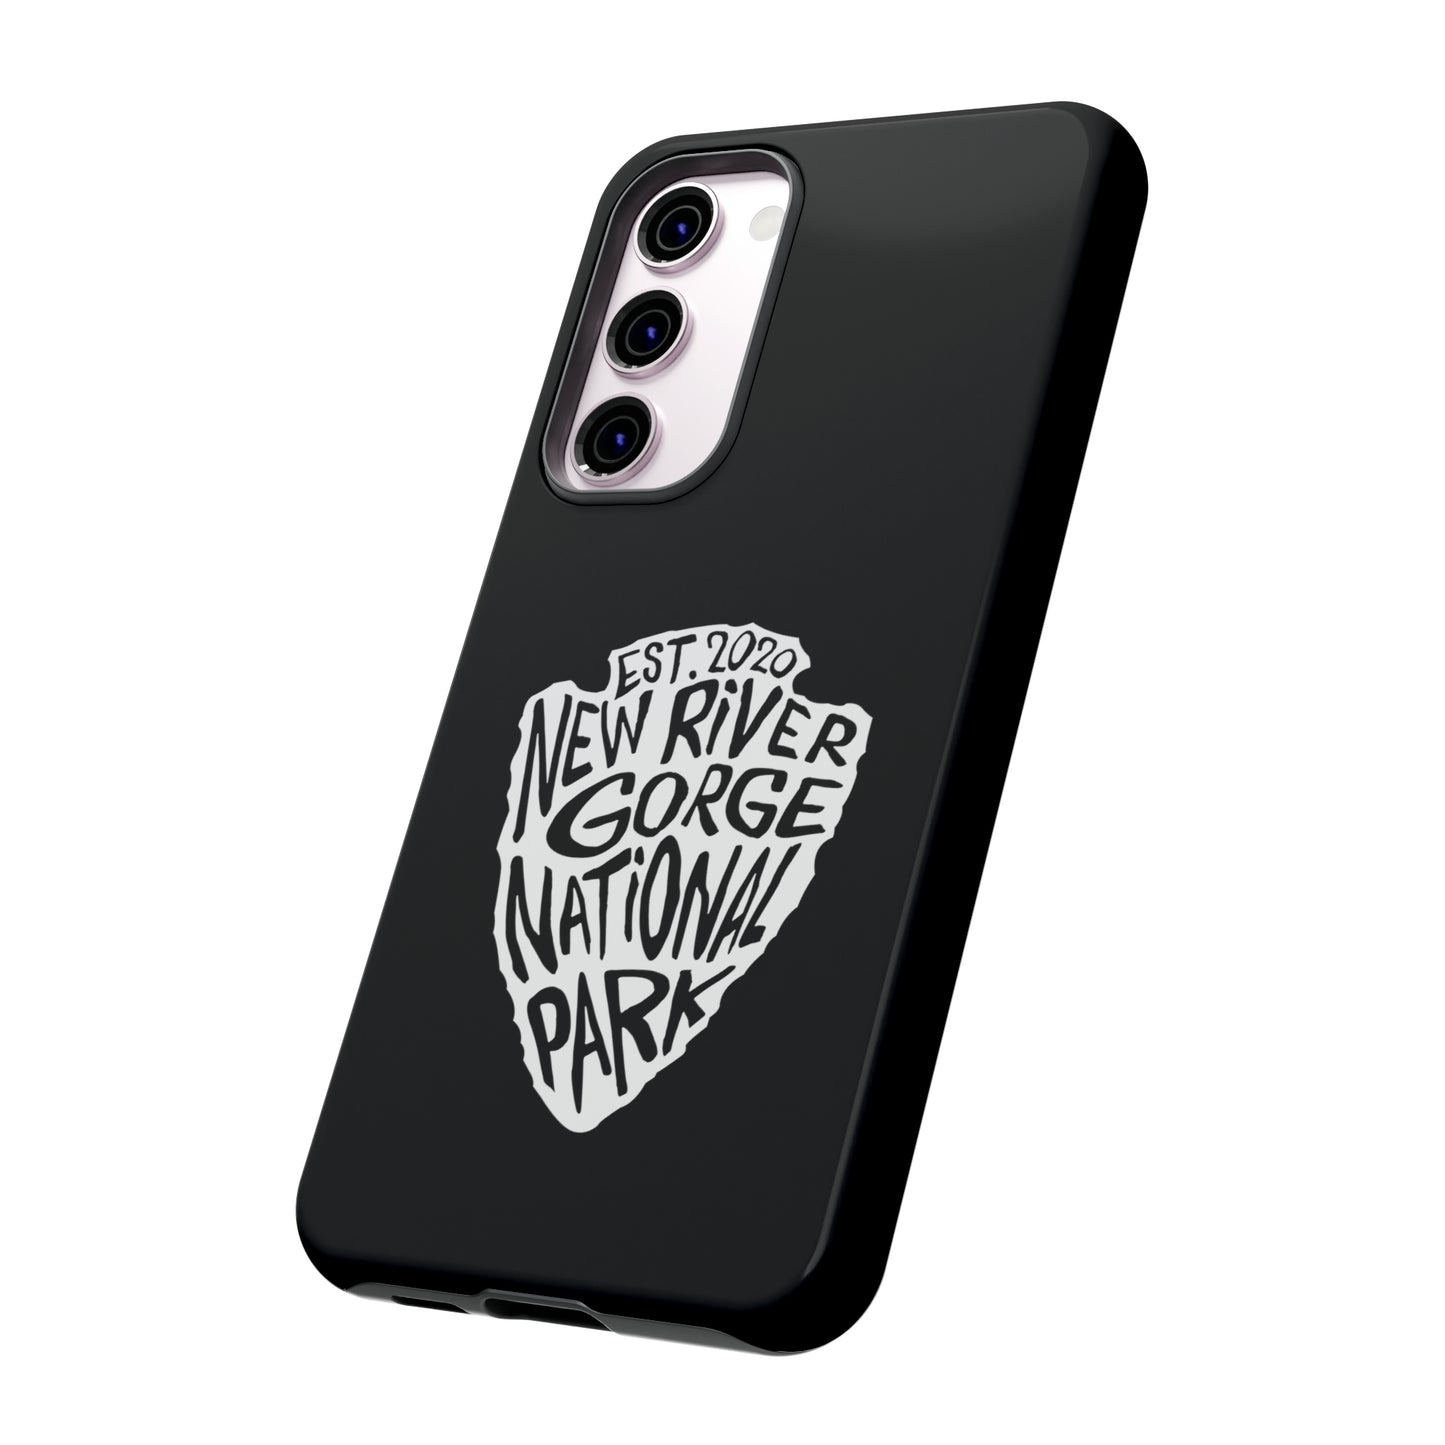 New River Gorge National Park Phone Case - Arrowhead Design